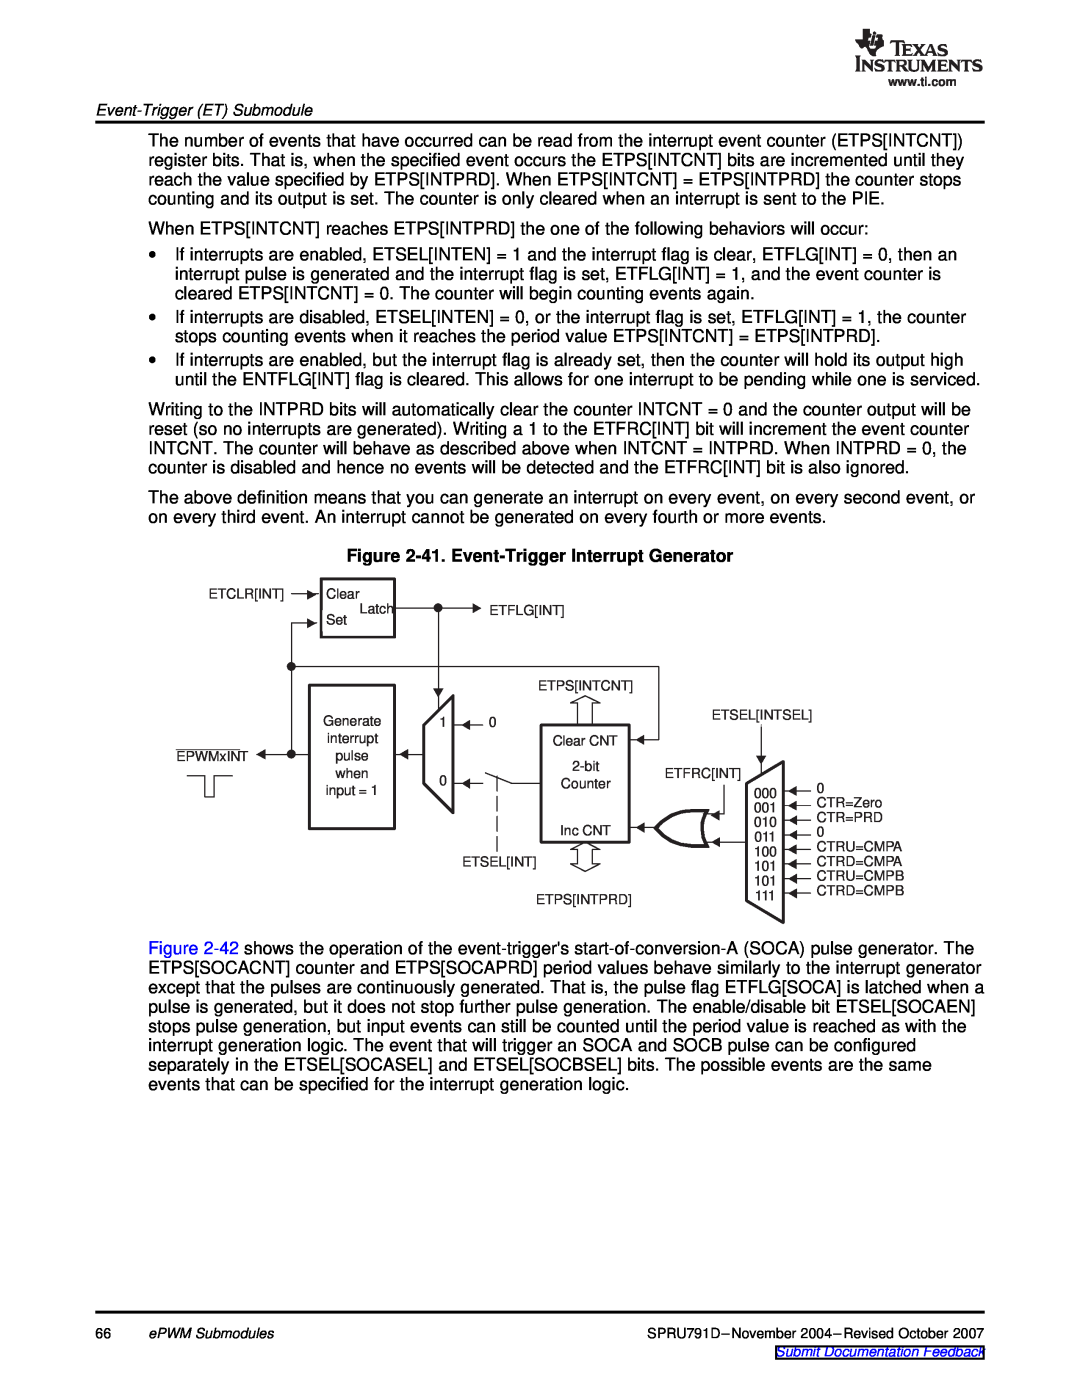 Texas Instruments TMS320x28xx, 28xxx manual 41. Event-Trigger Interrupt Generator, input = 